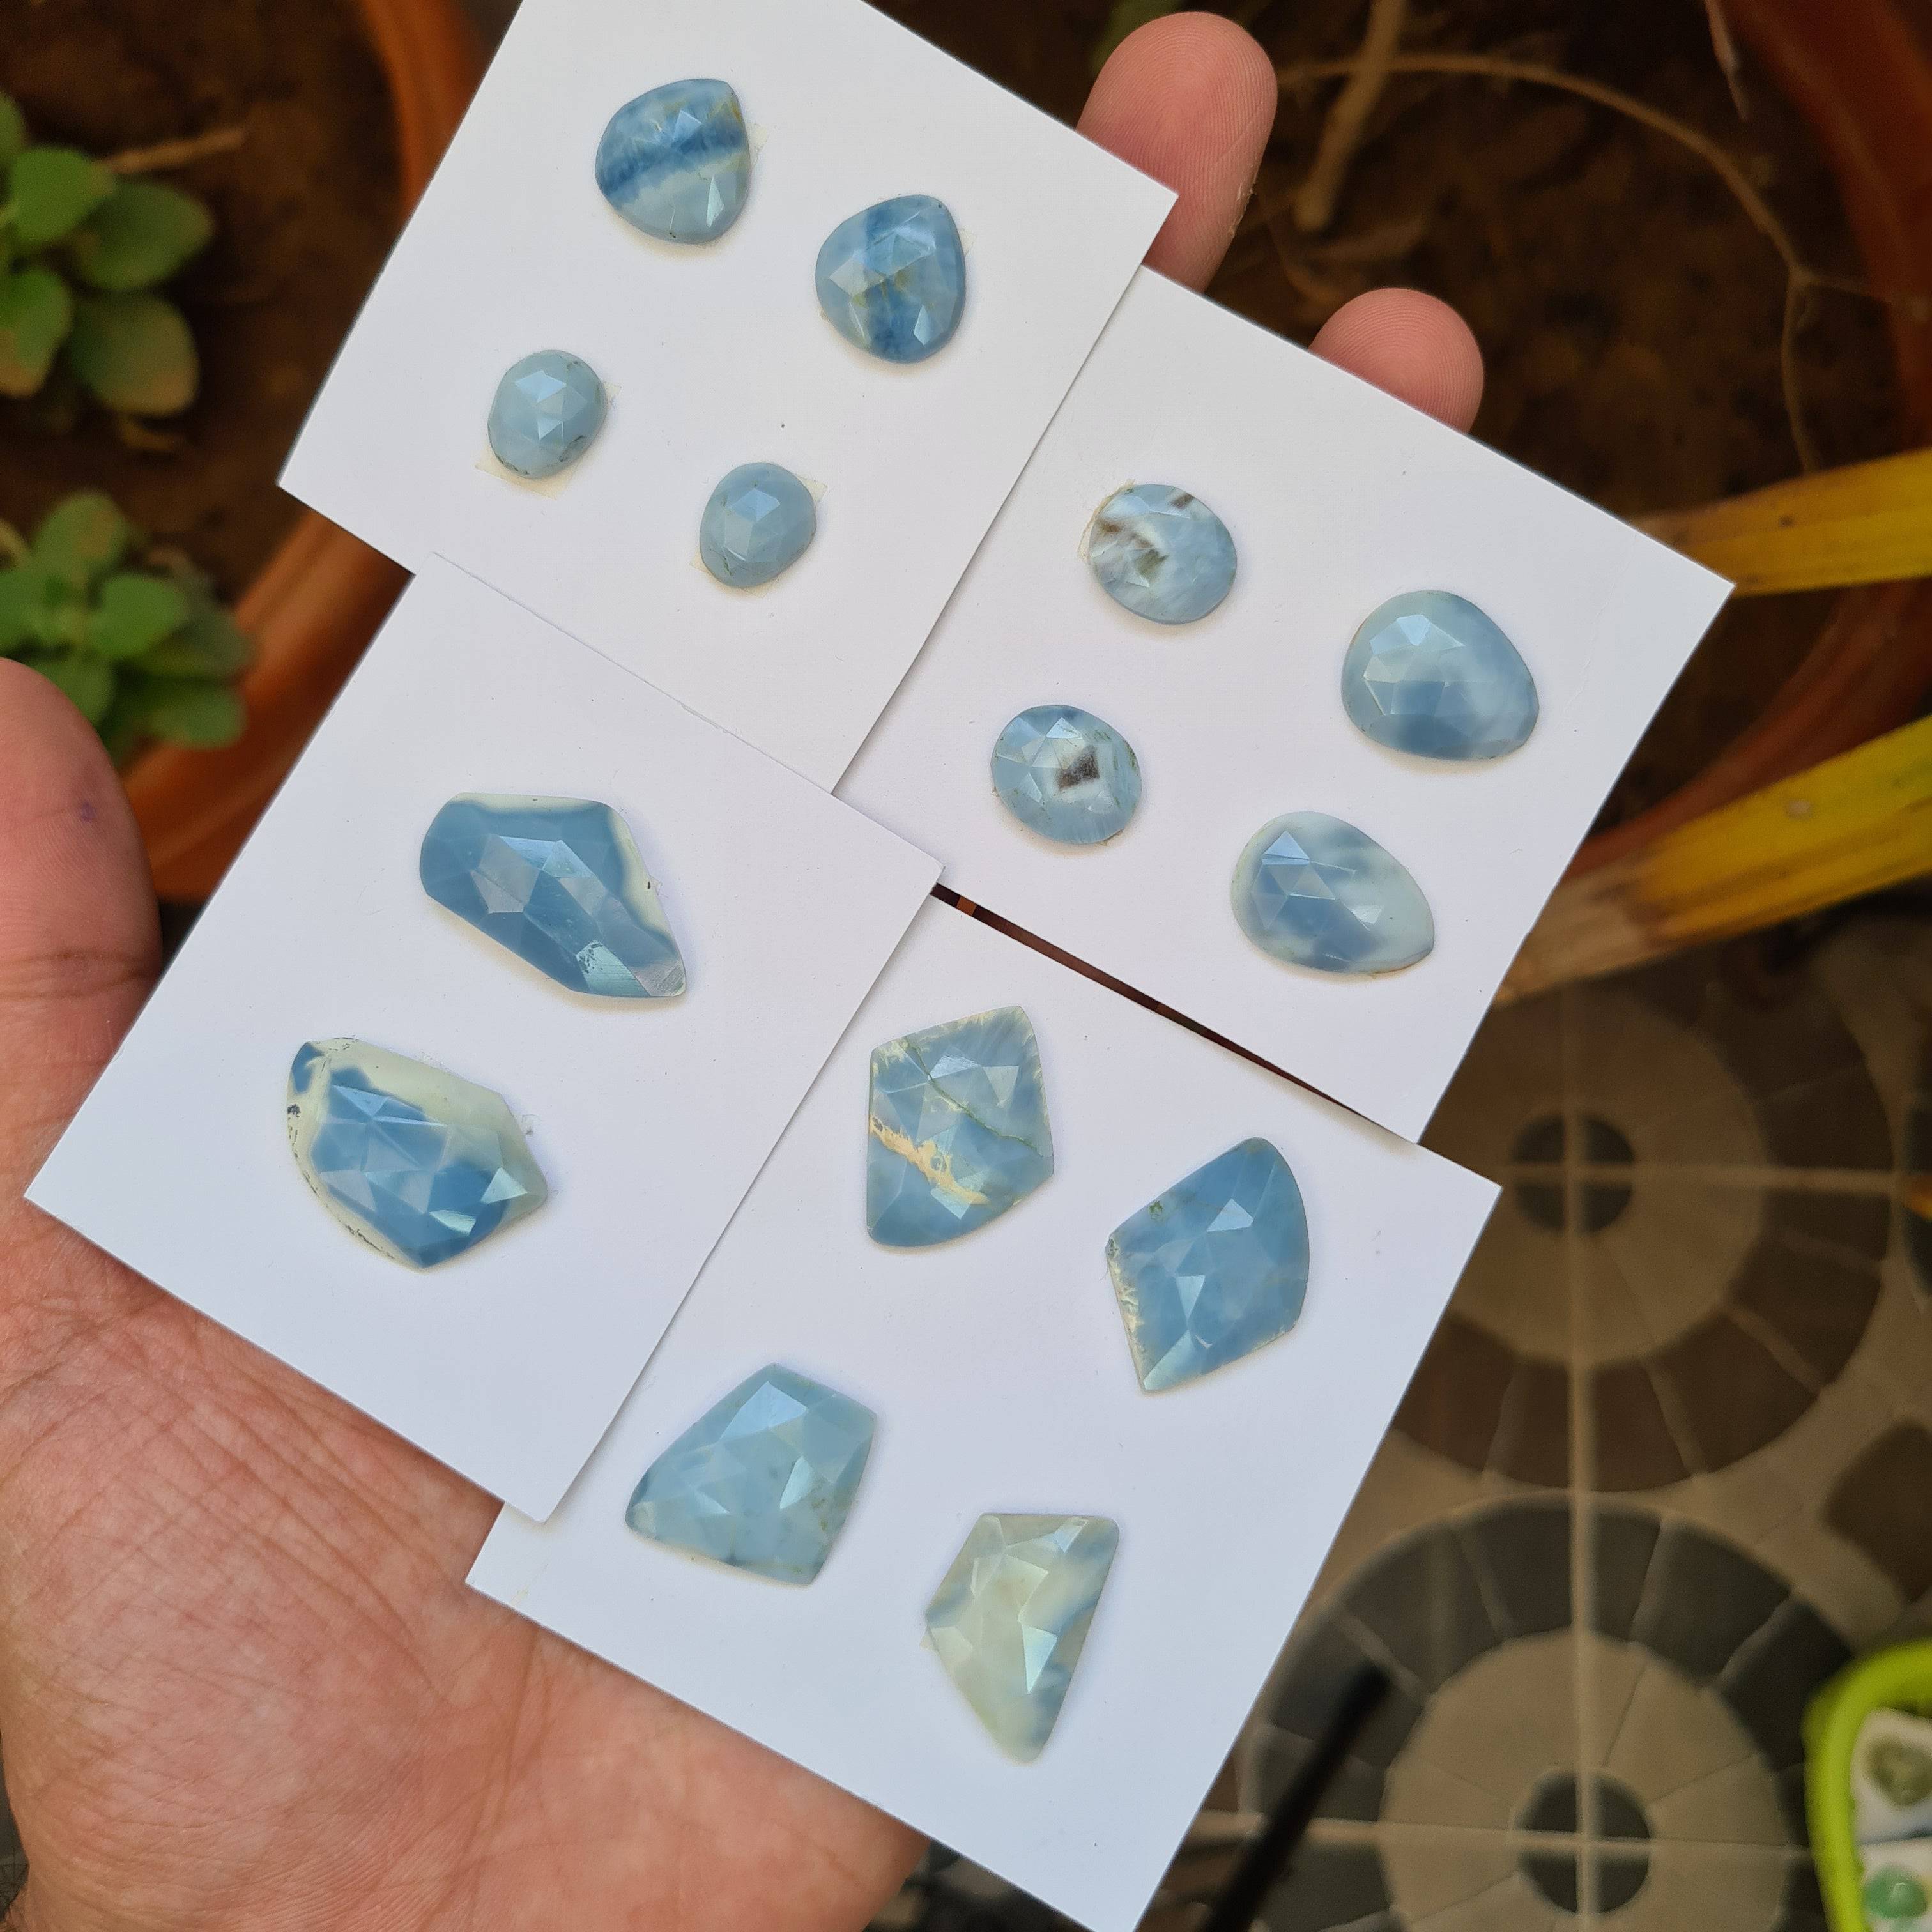 14 pcs Natural Blue Lace Opal Faceted Gemstones Mix Shape, 12-27mm - The LabradoriteKing